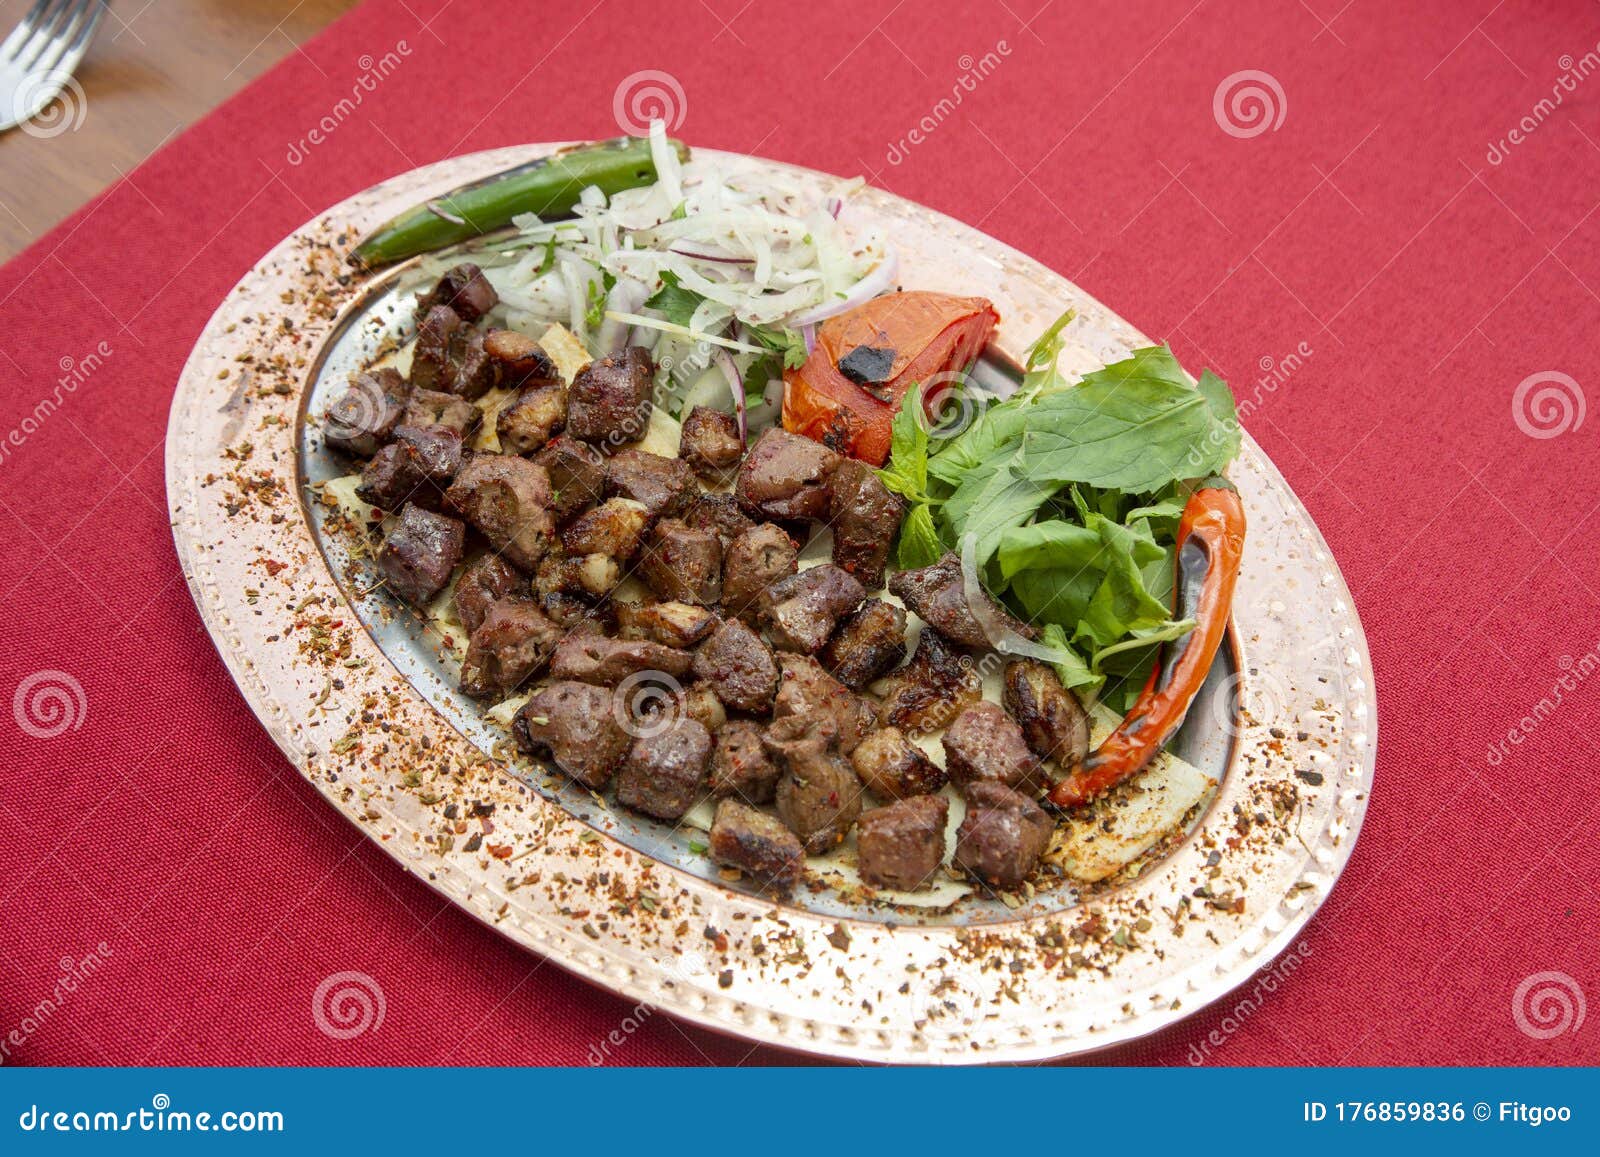 Revealed: Emirati food and cuisine in Dubai - Arabianbusiness